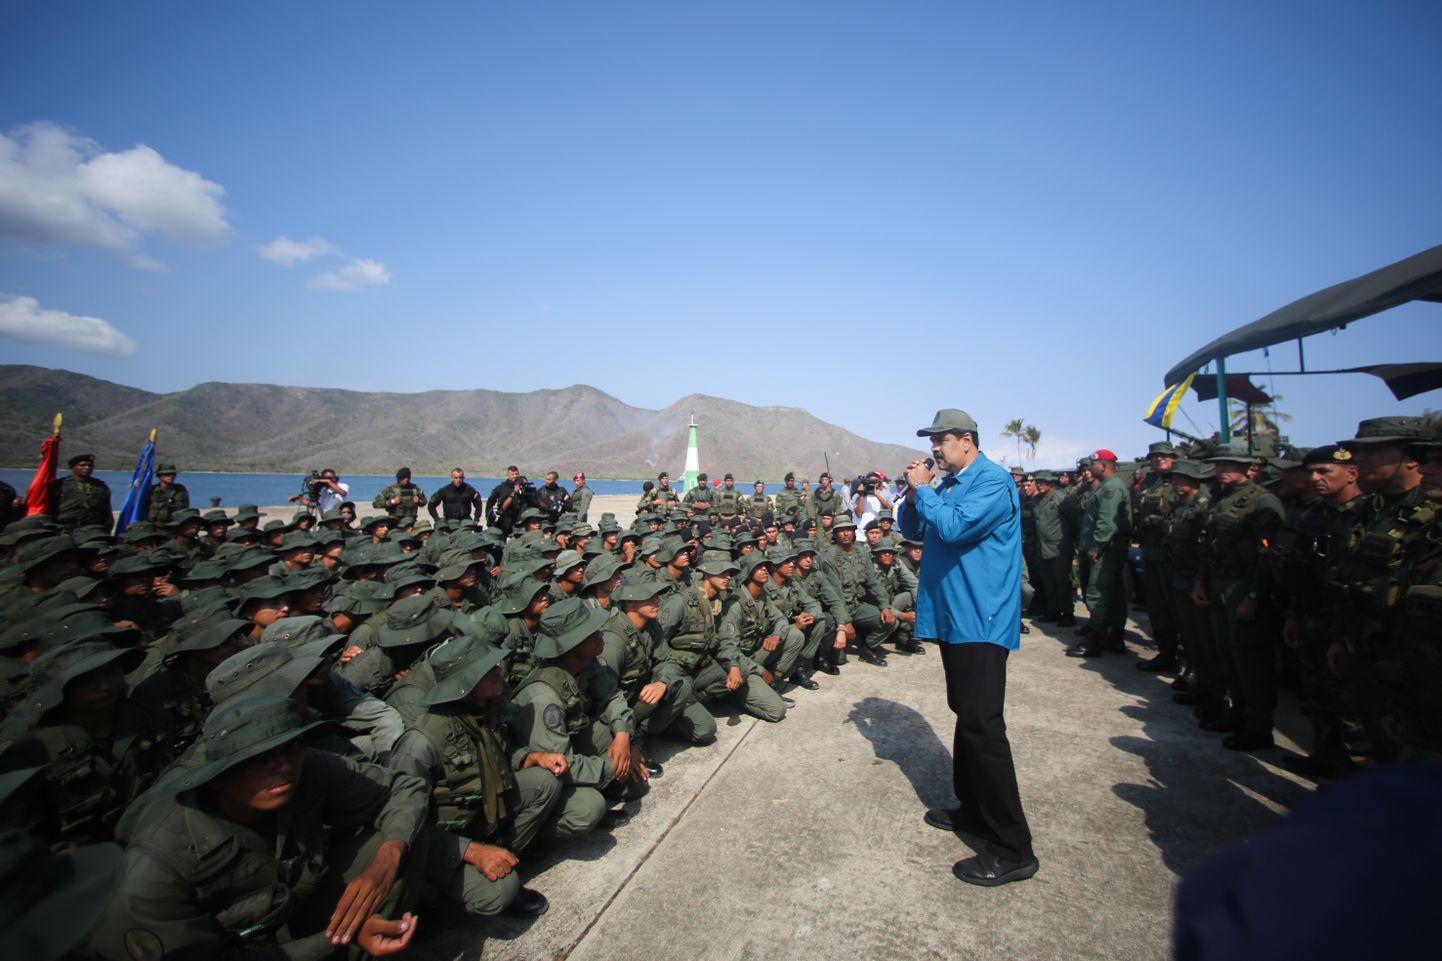 Venezuela president Nicolas Maduro sõduritele kõnet pidamas.